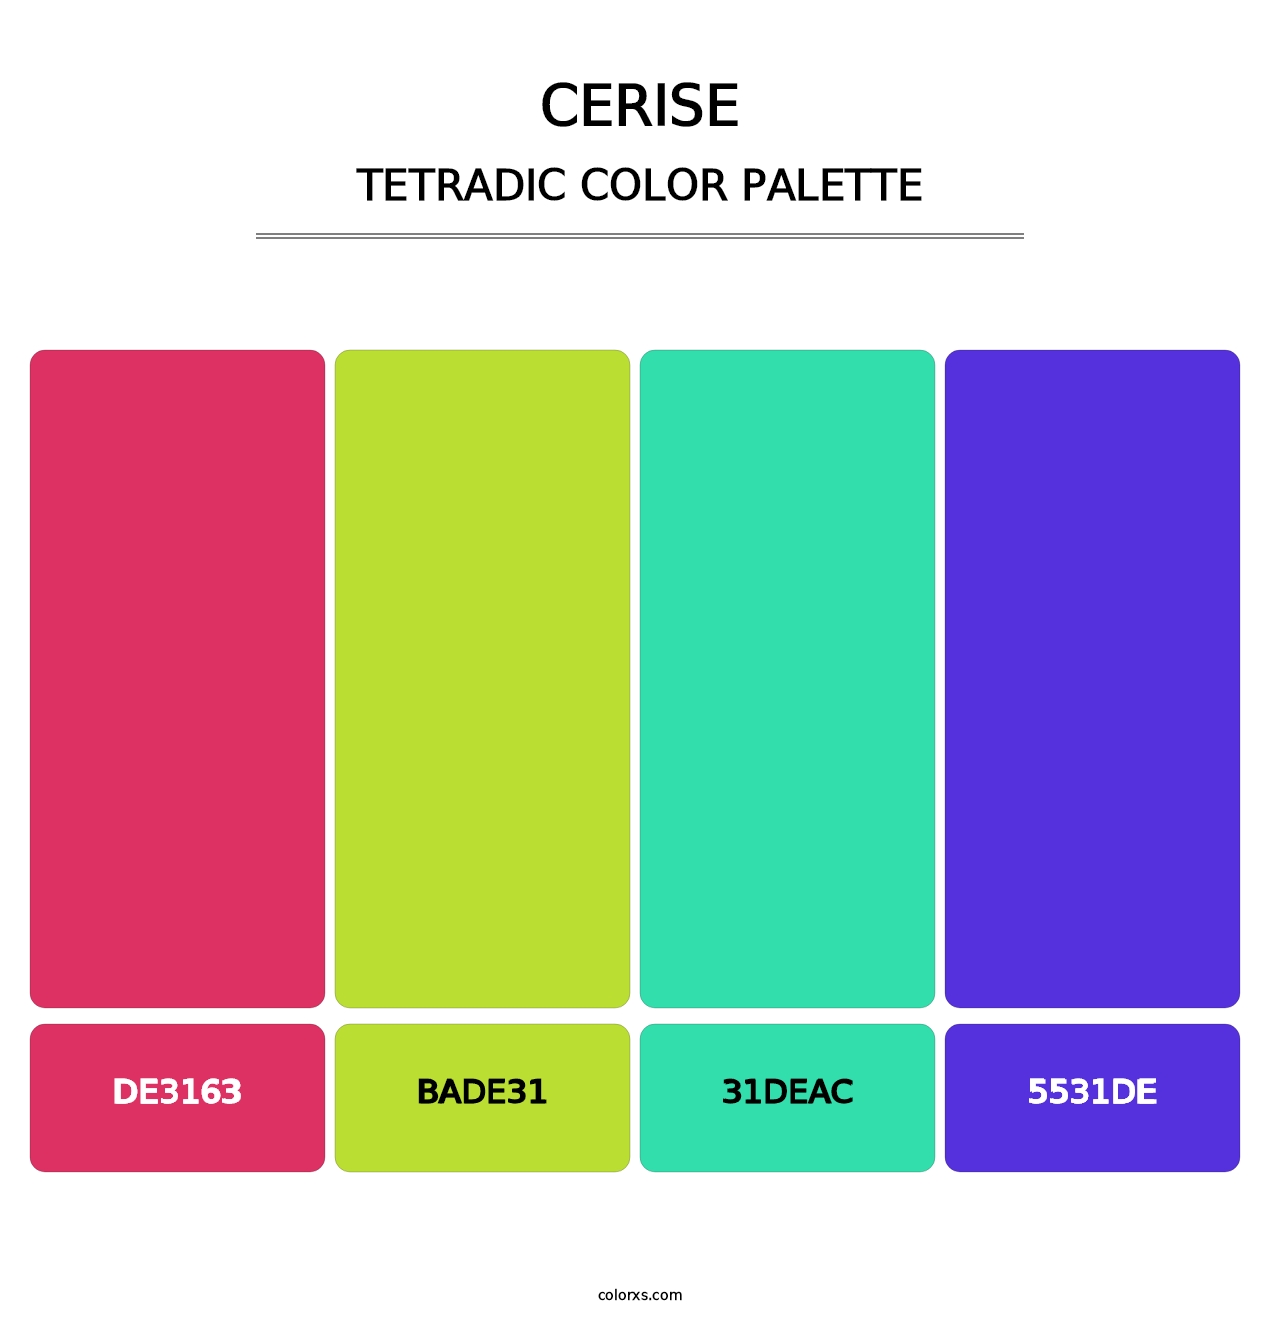 Cerise - Tetradic Color Palette